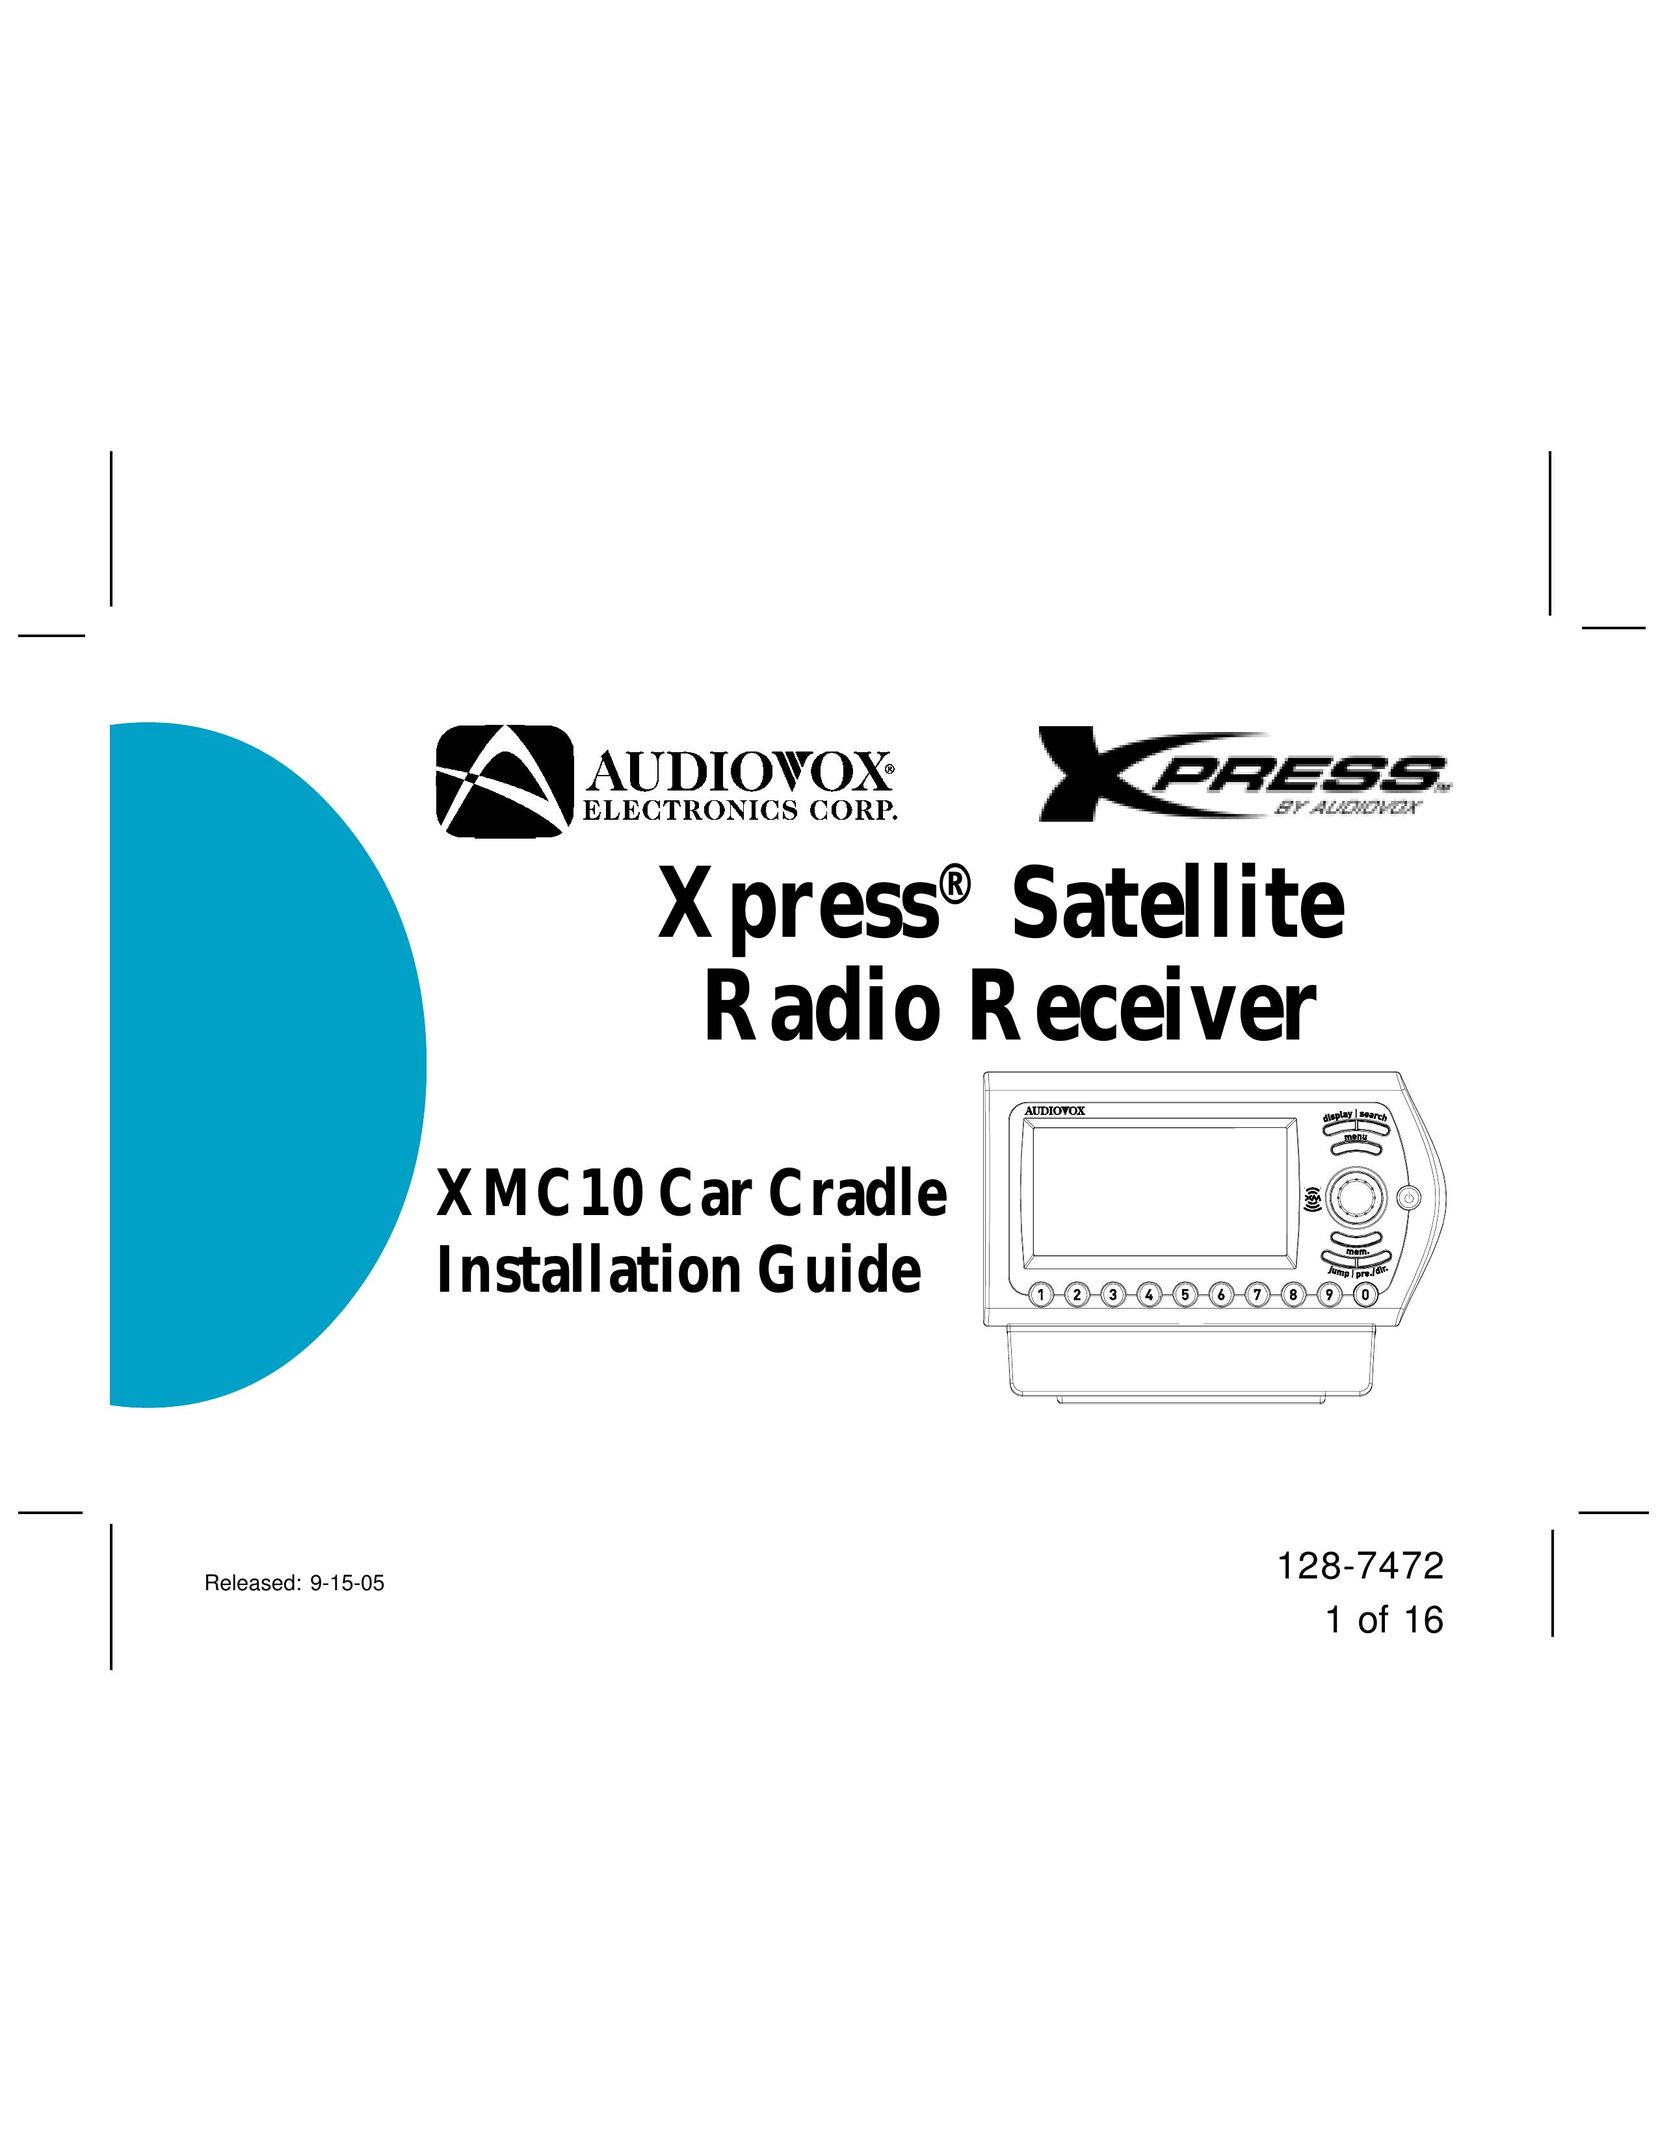 Audiovox XMC10 Car Satellite Radio System User Manual